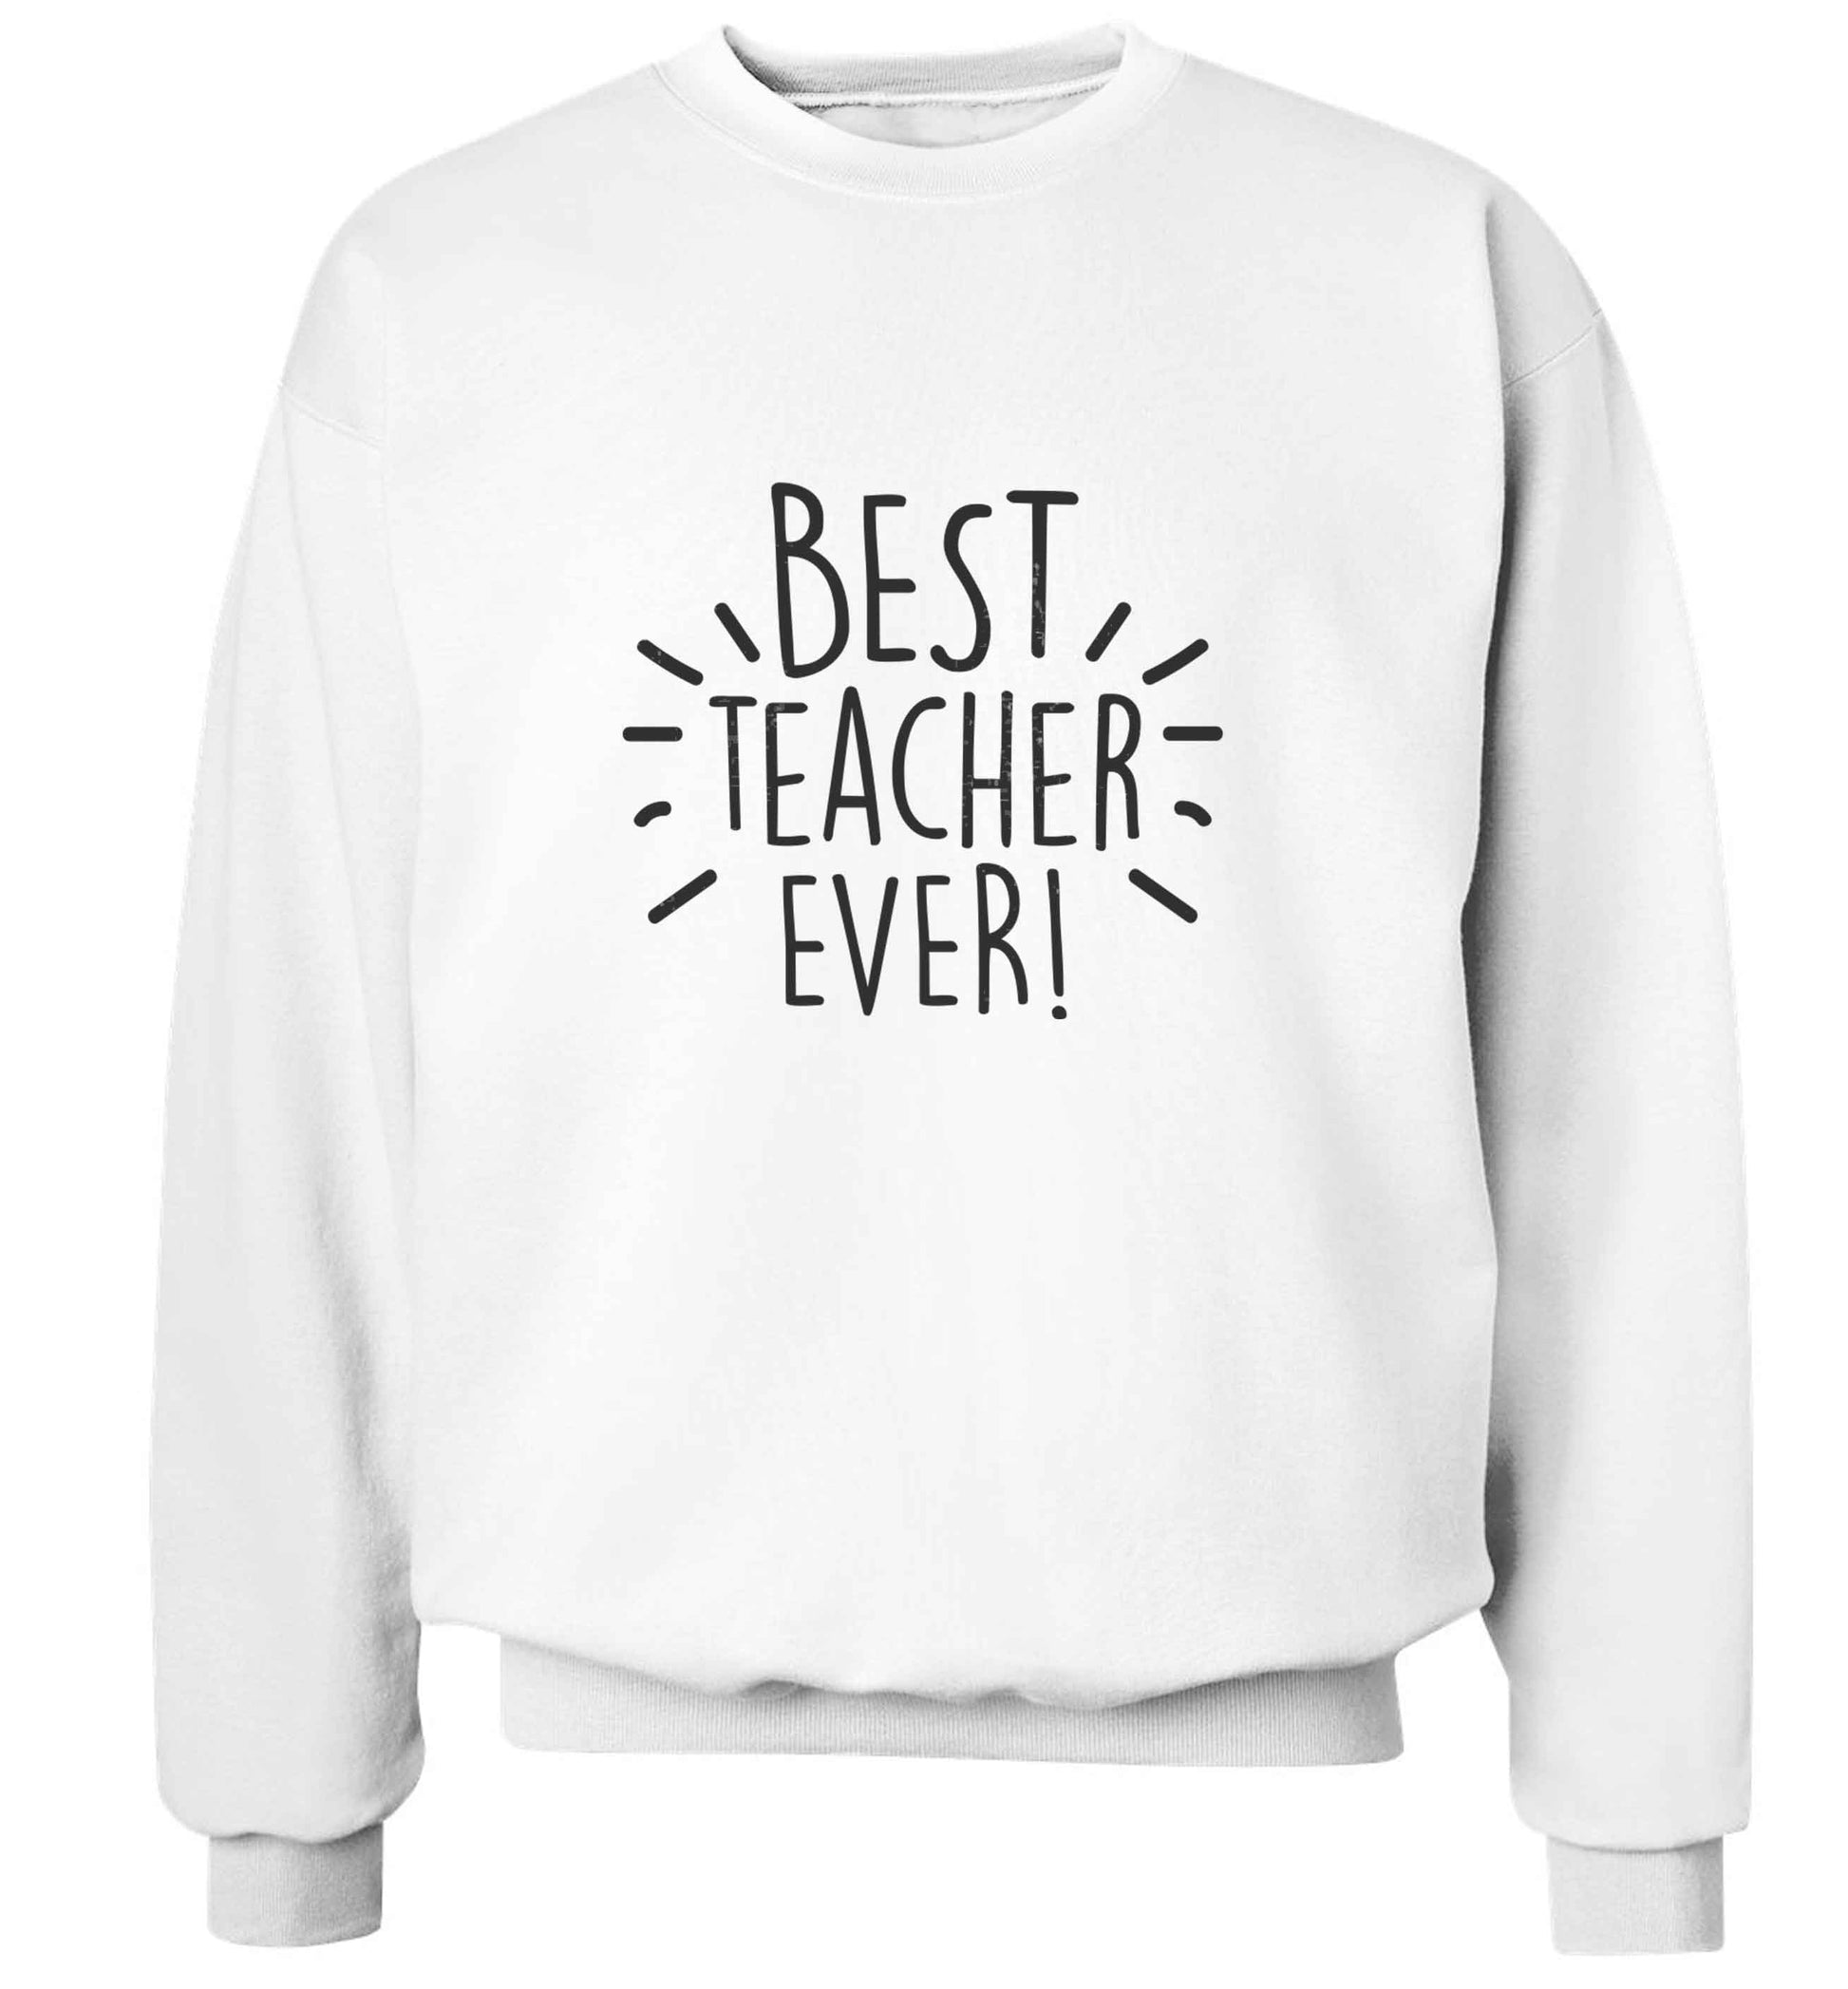 Best teacher ever! adult's unisex white sweater 2XL